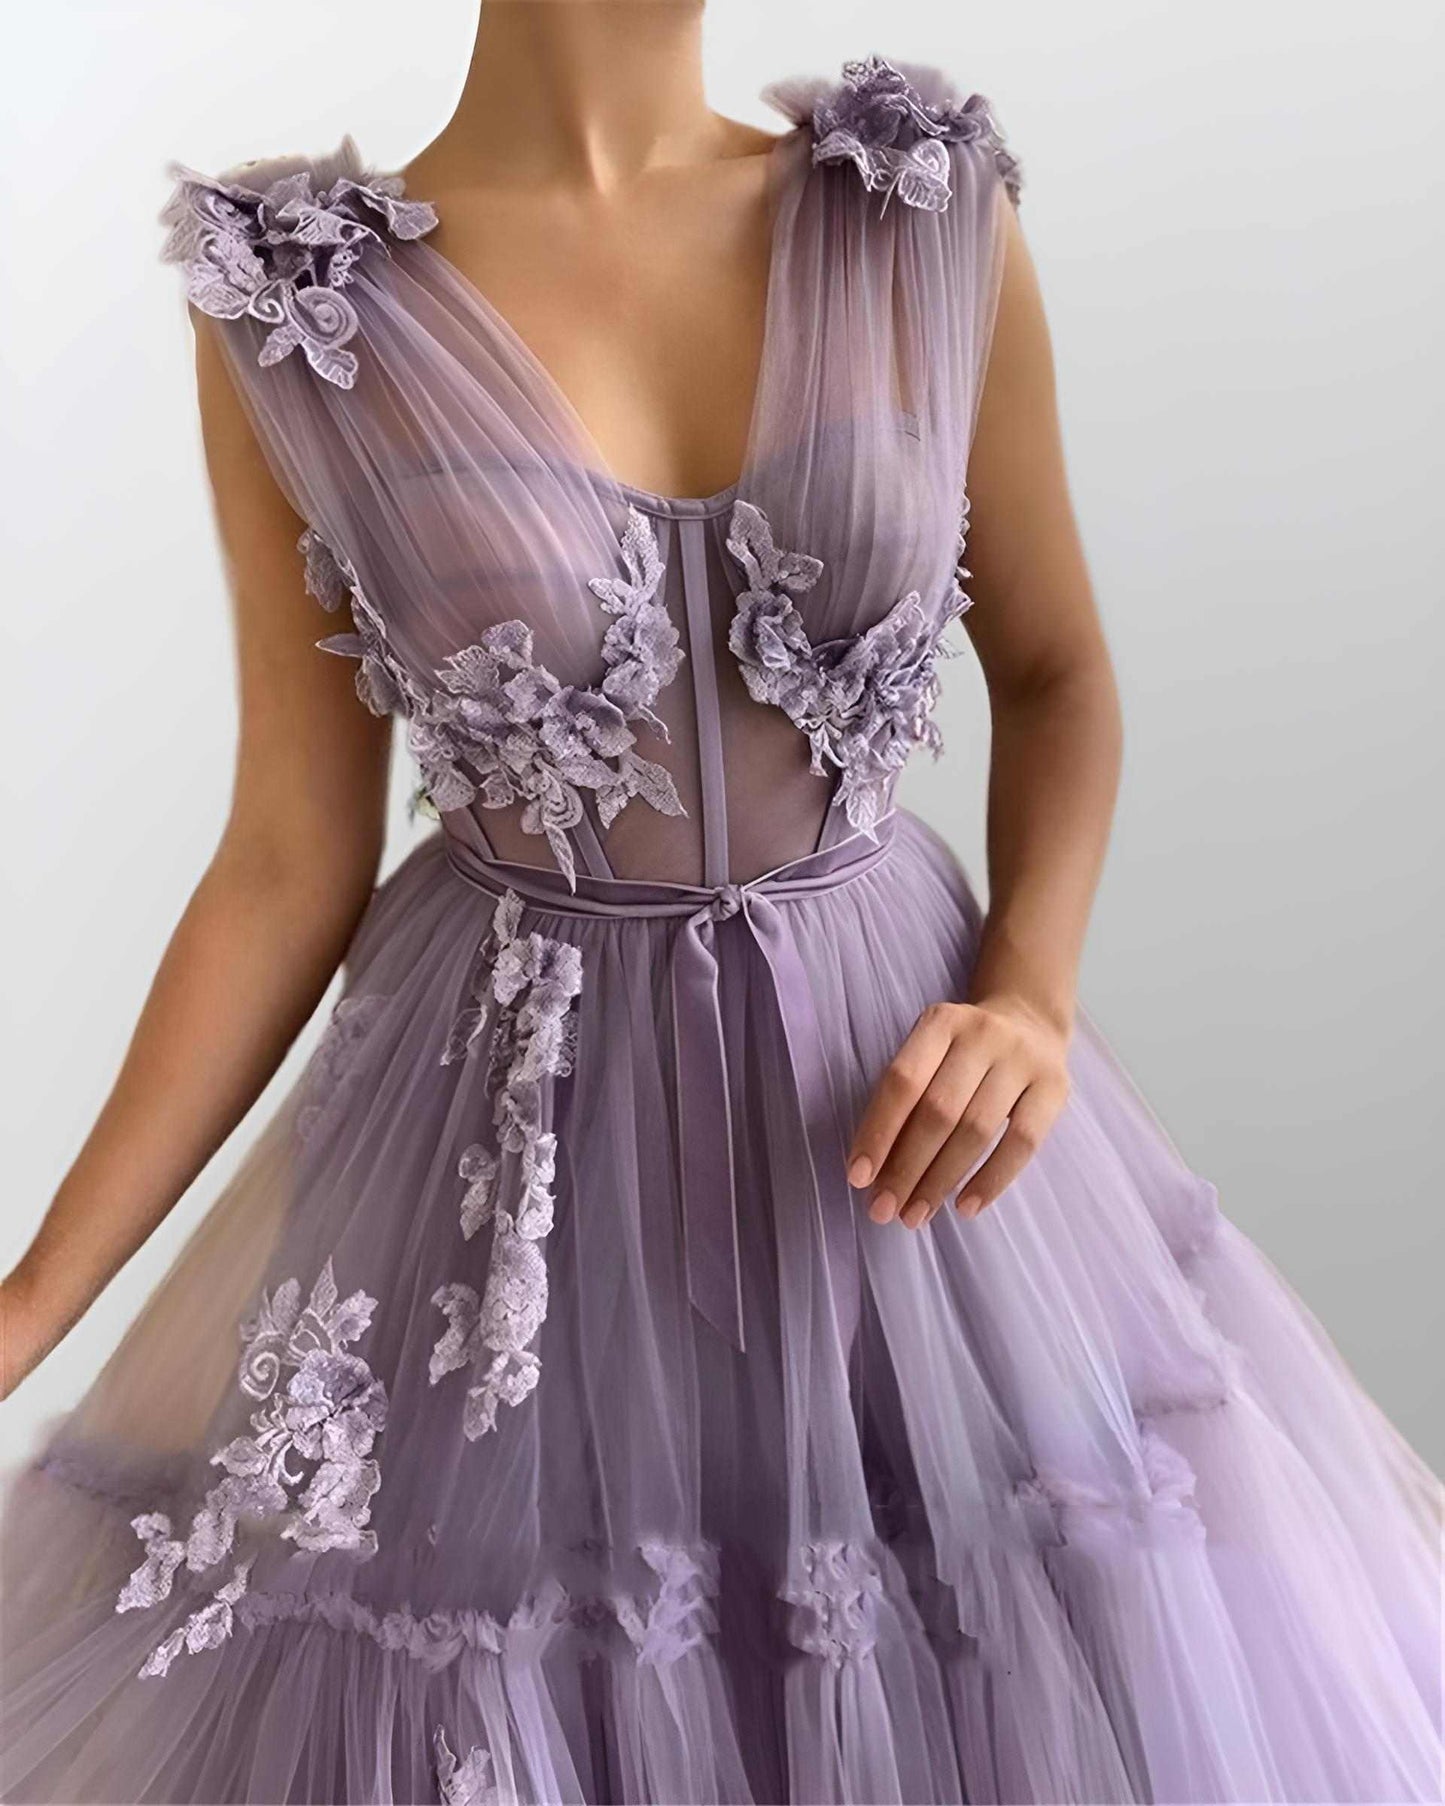 RAQUEL Formal Couture Dress